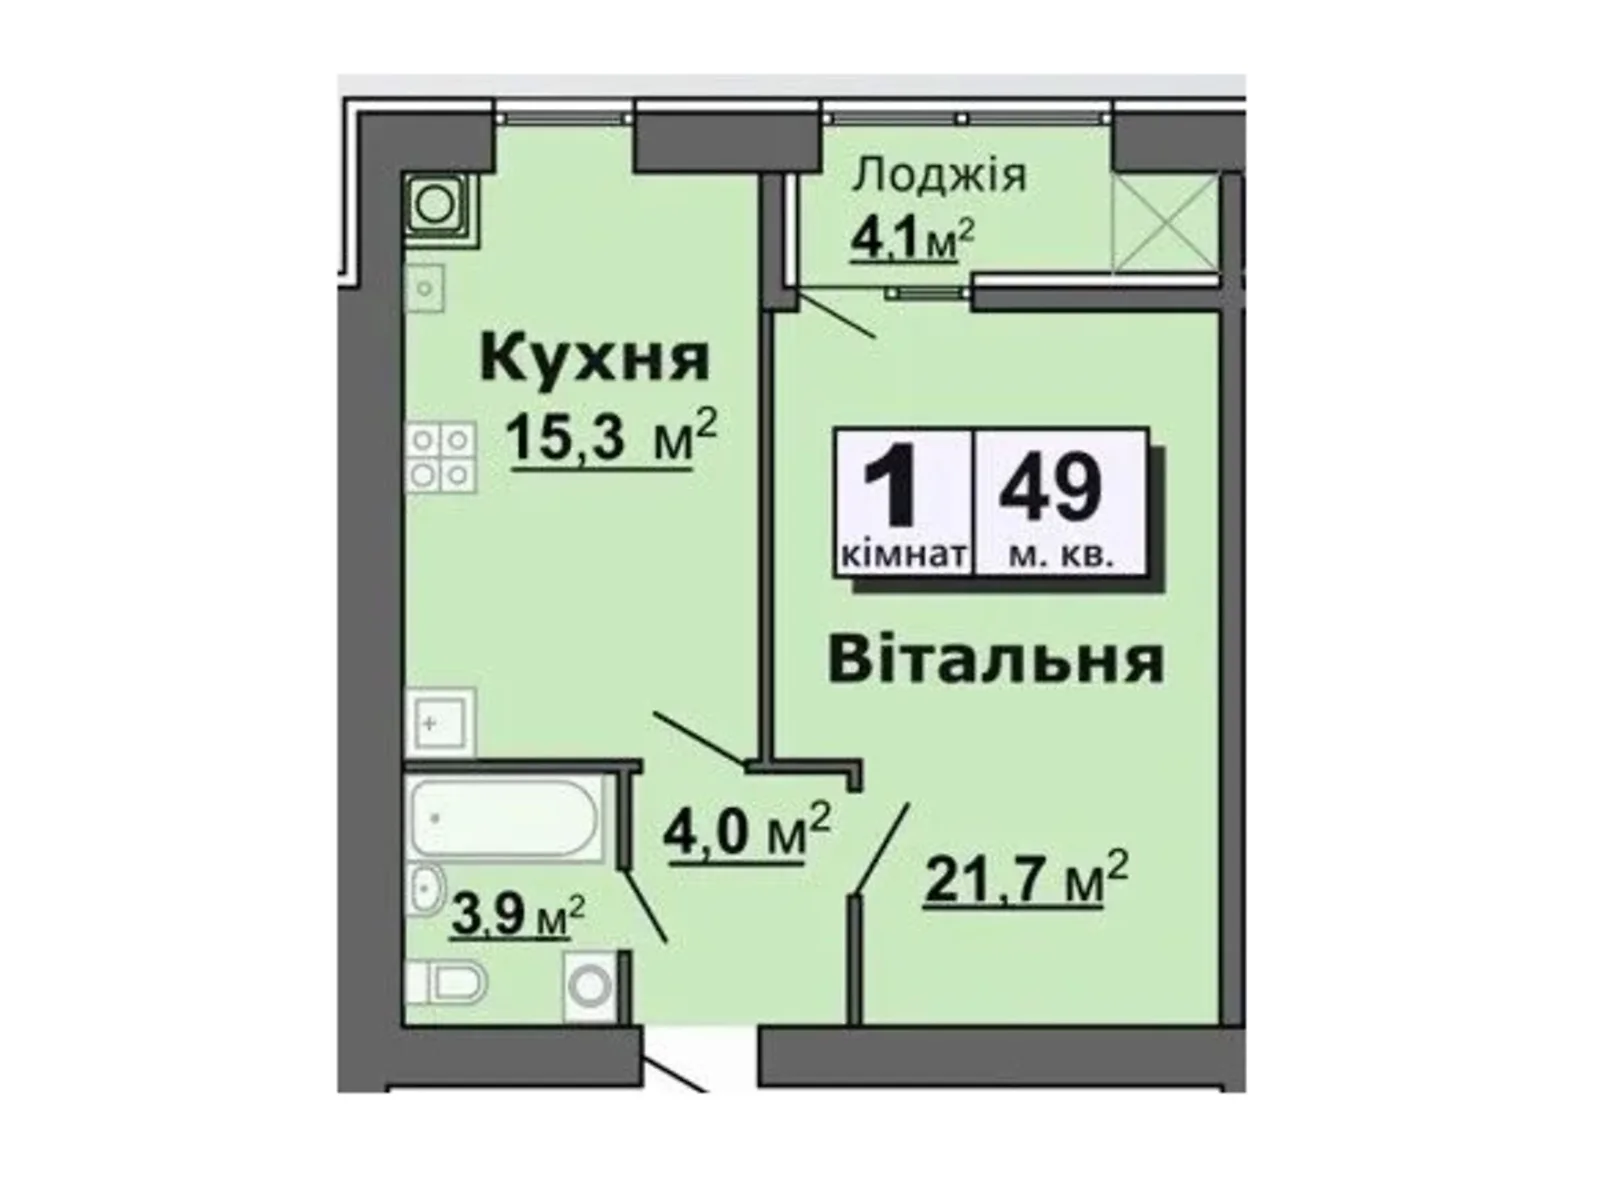 1-кімнатна квартира 49 кв. м у Луцьку, цена: 40783 $ - фото 1